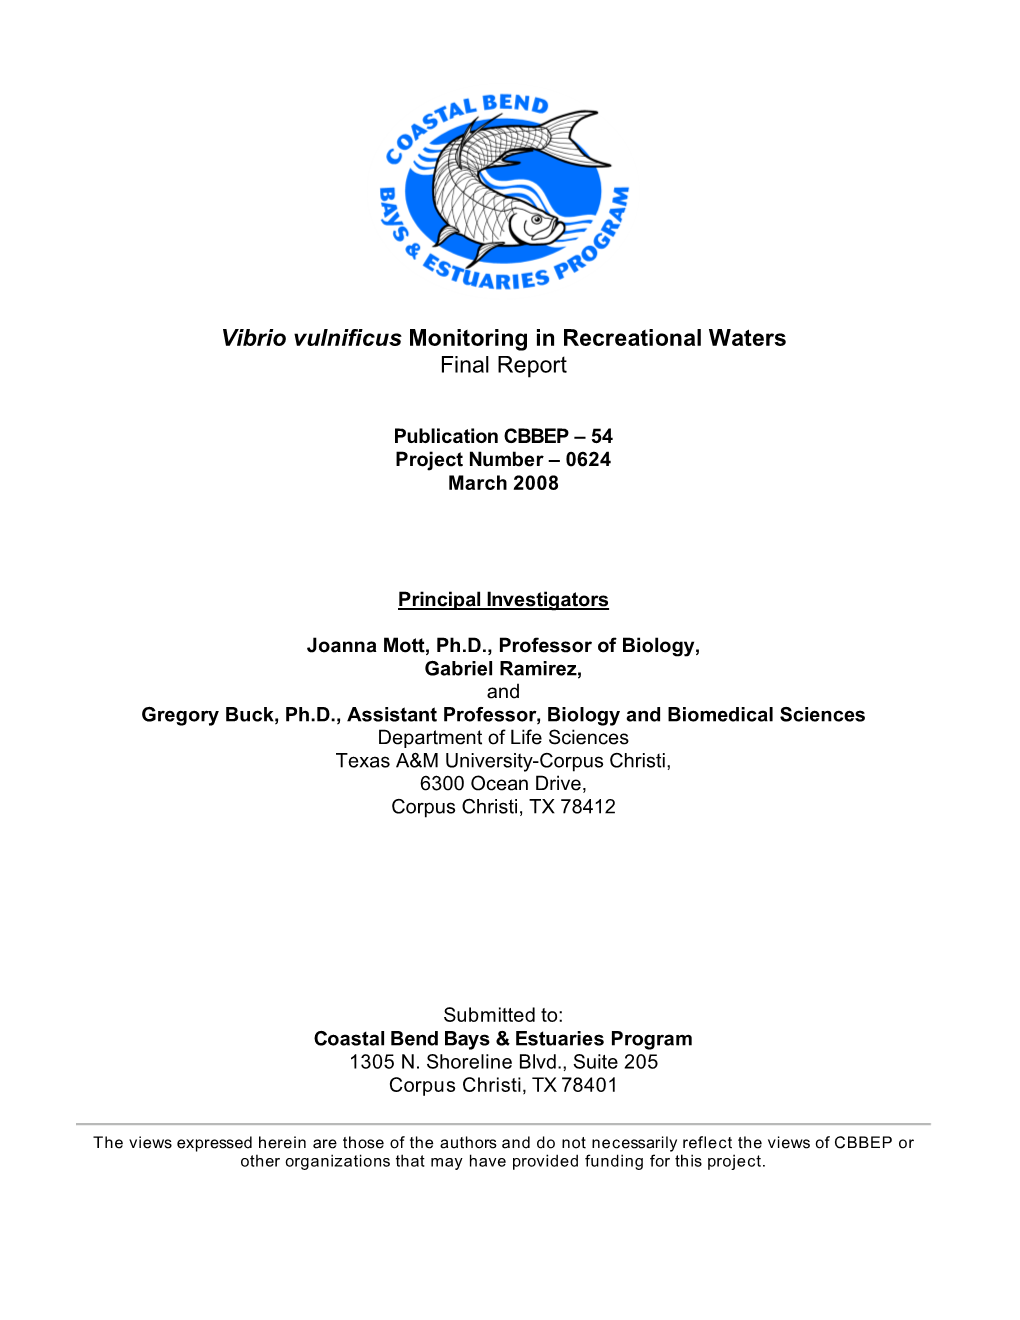 Vibrio Vulnificus Monitoring in Recreational Waters Final Report